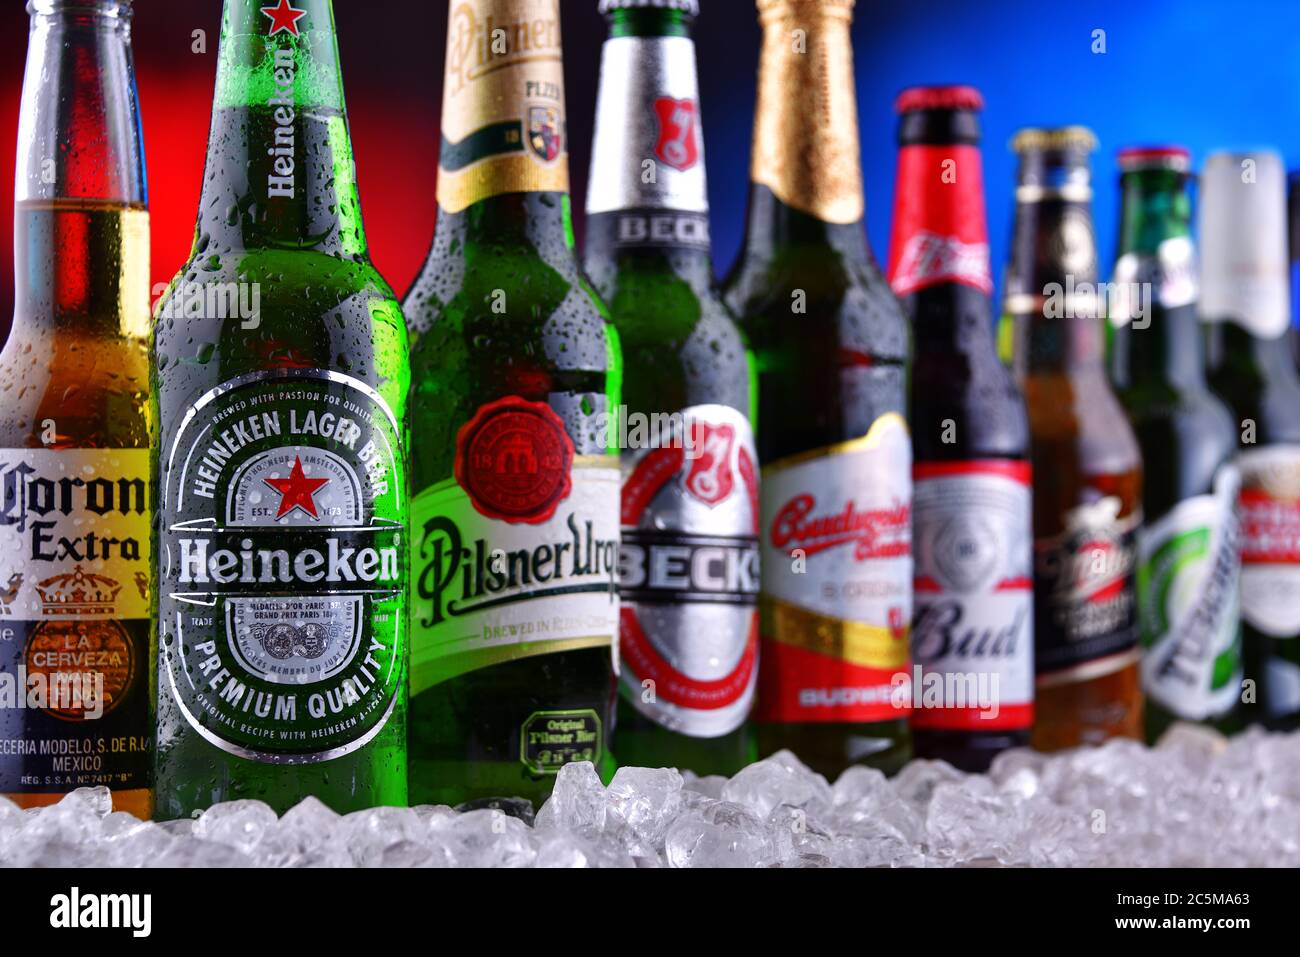 POZNAN, POL - DEC 23, 2019: Bottles of famous global beer brands including Heineken, Becks, Bud, Miller, Corona, Stella Artois, and Pilsner Urquell Stock Photo